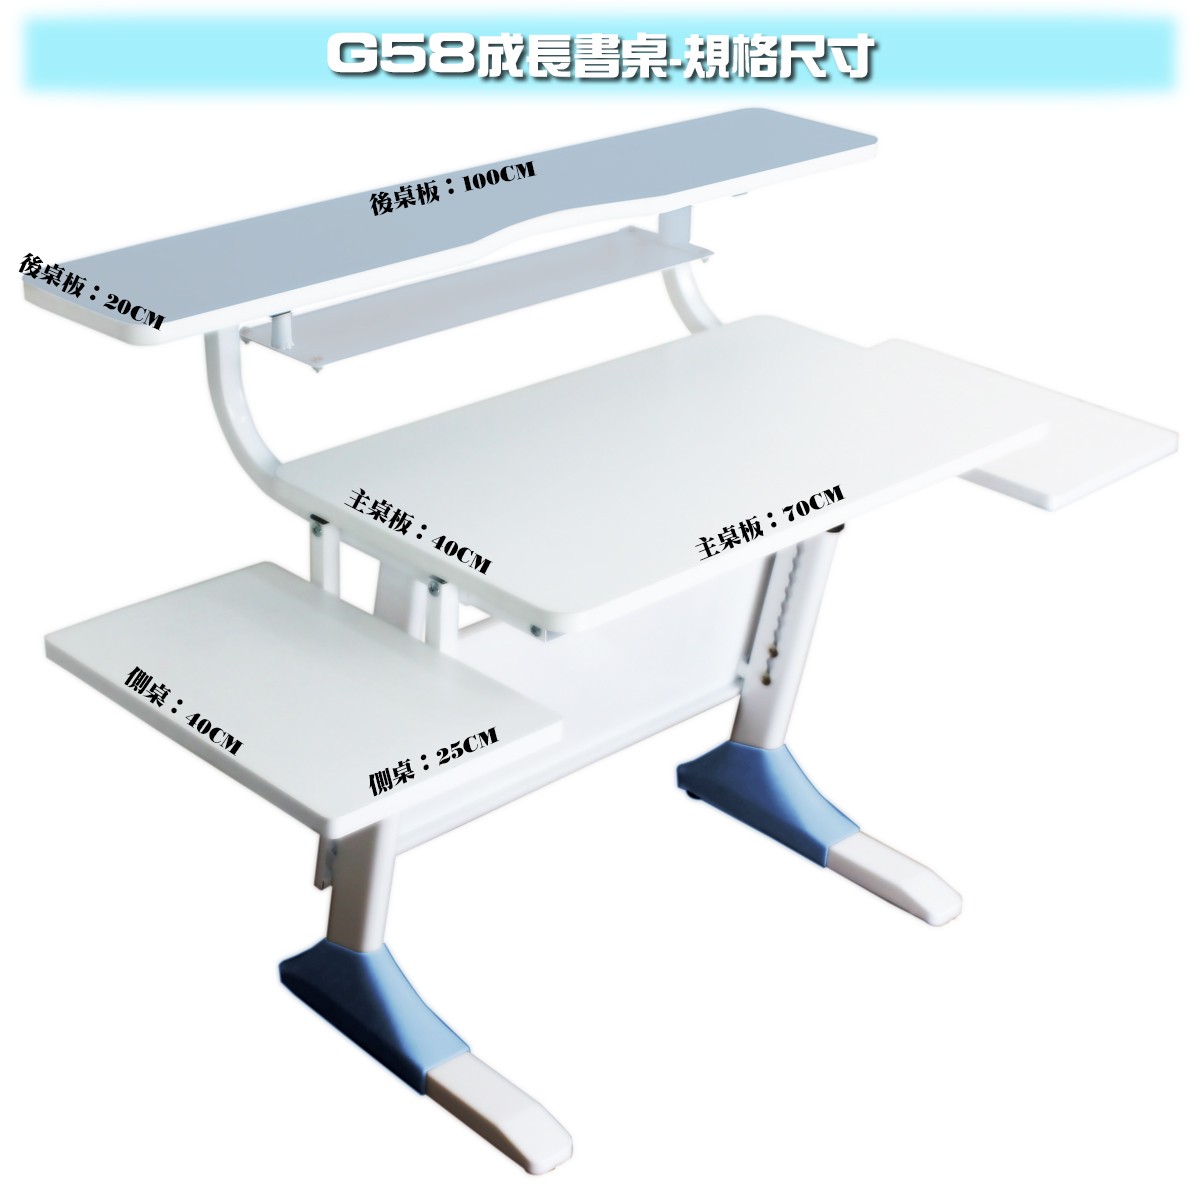 G58成長書桌規格尺寸說明